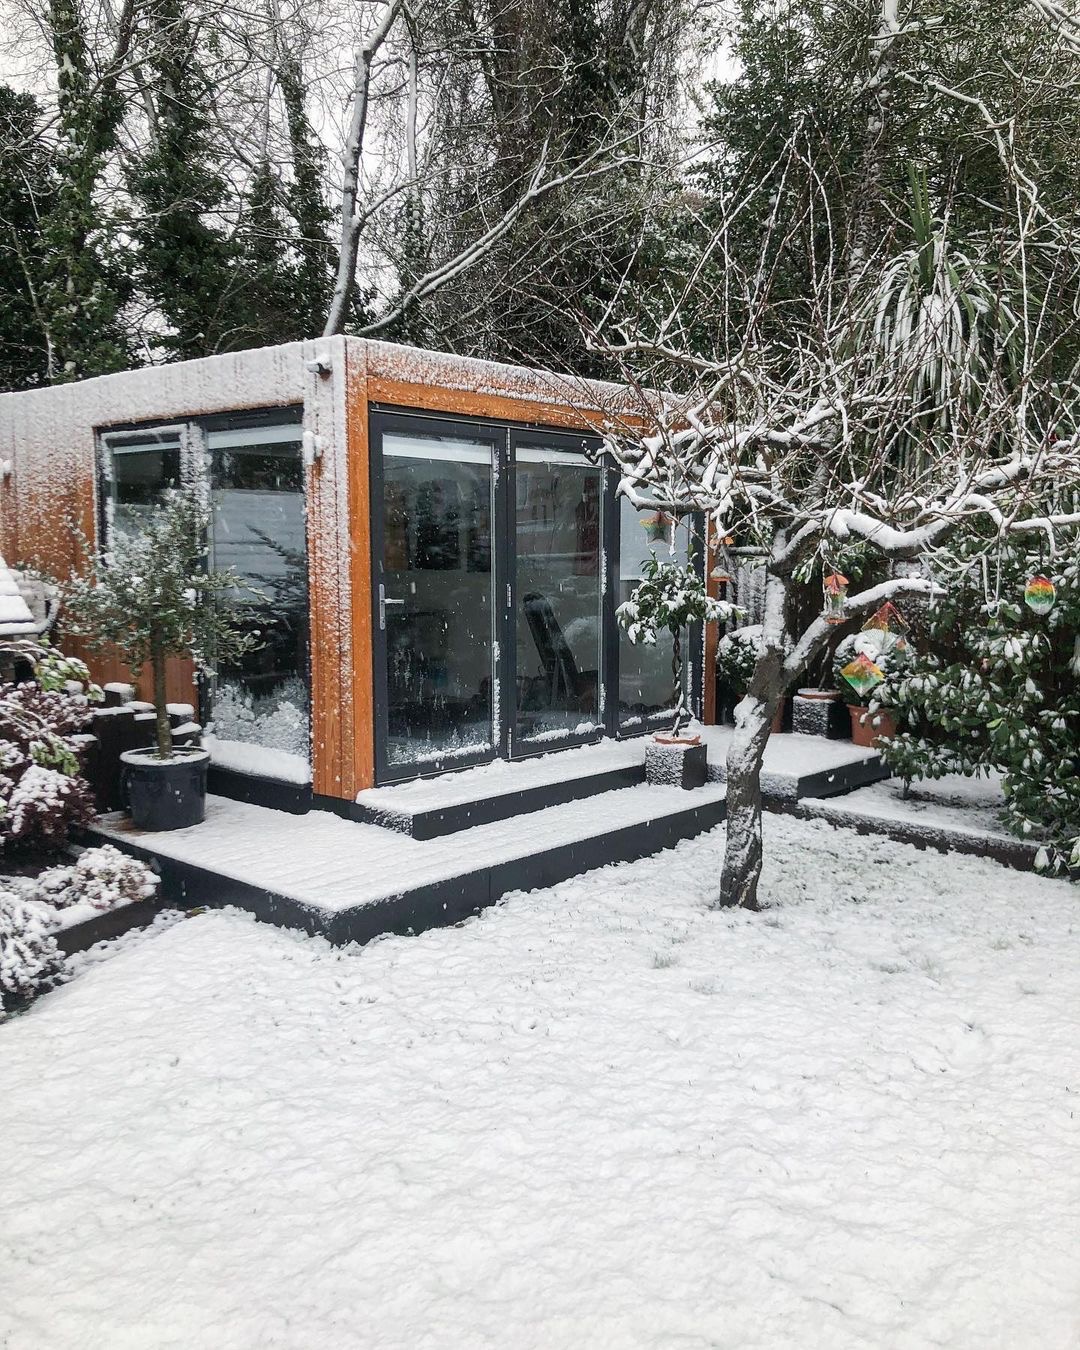 Garden office in the snow